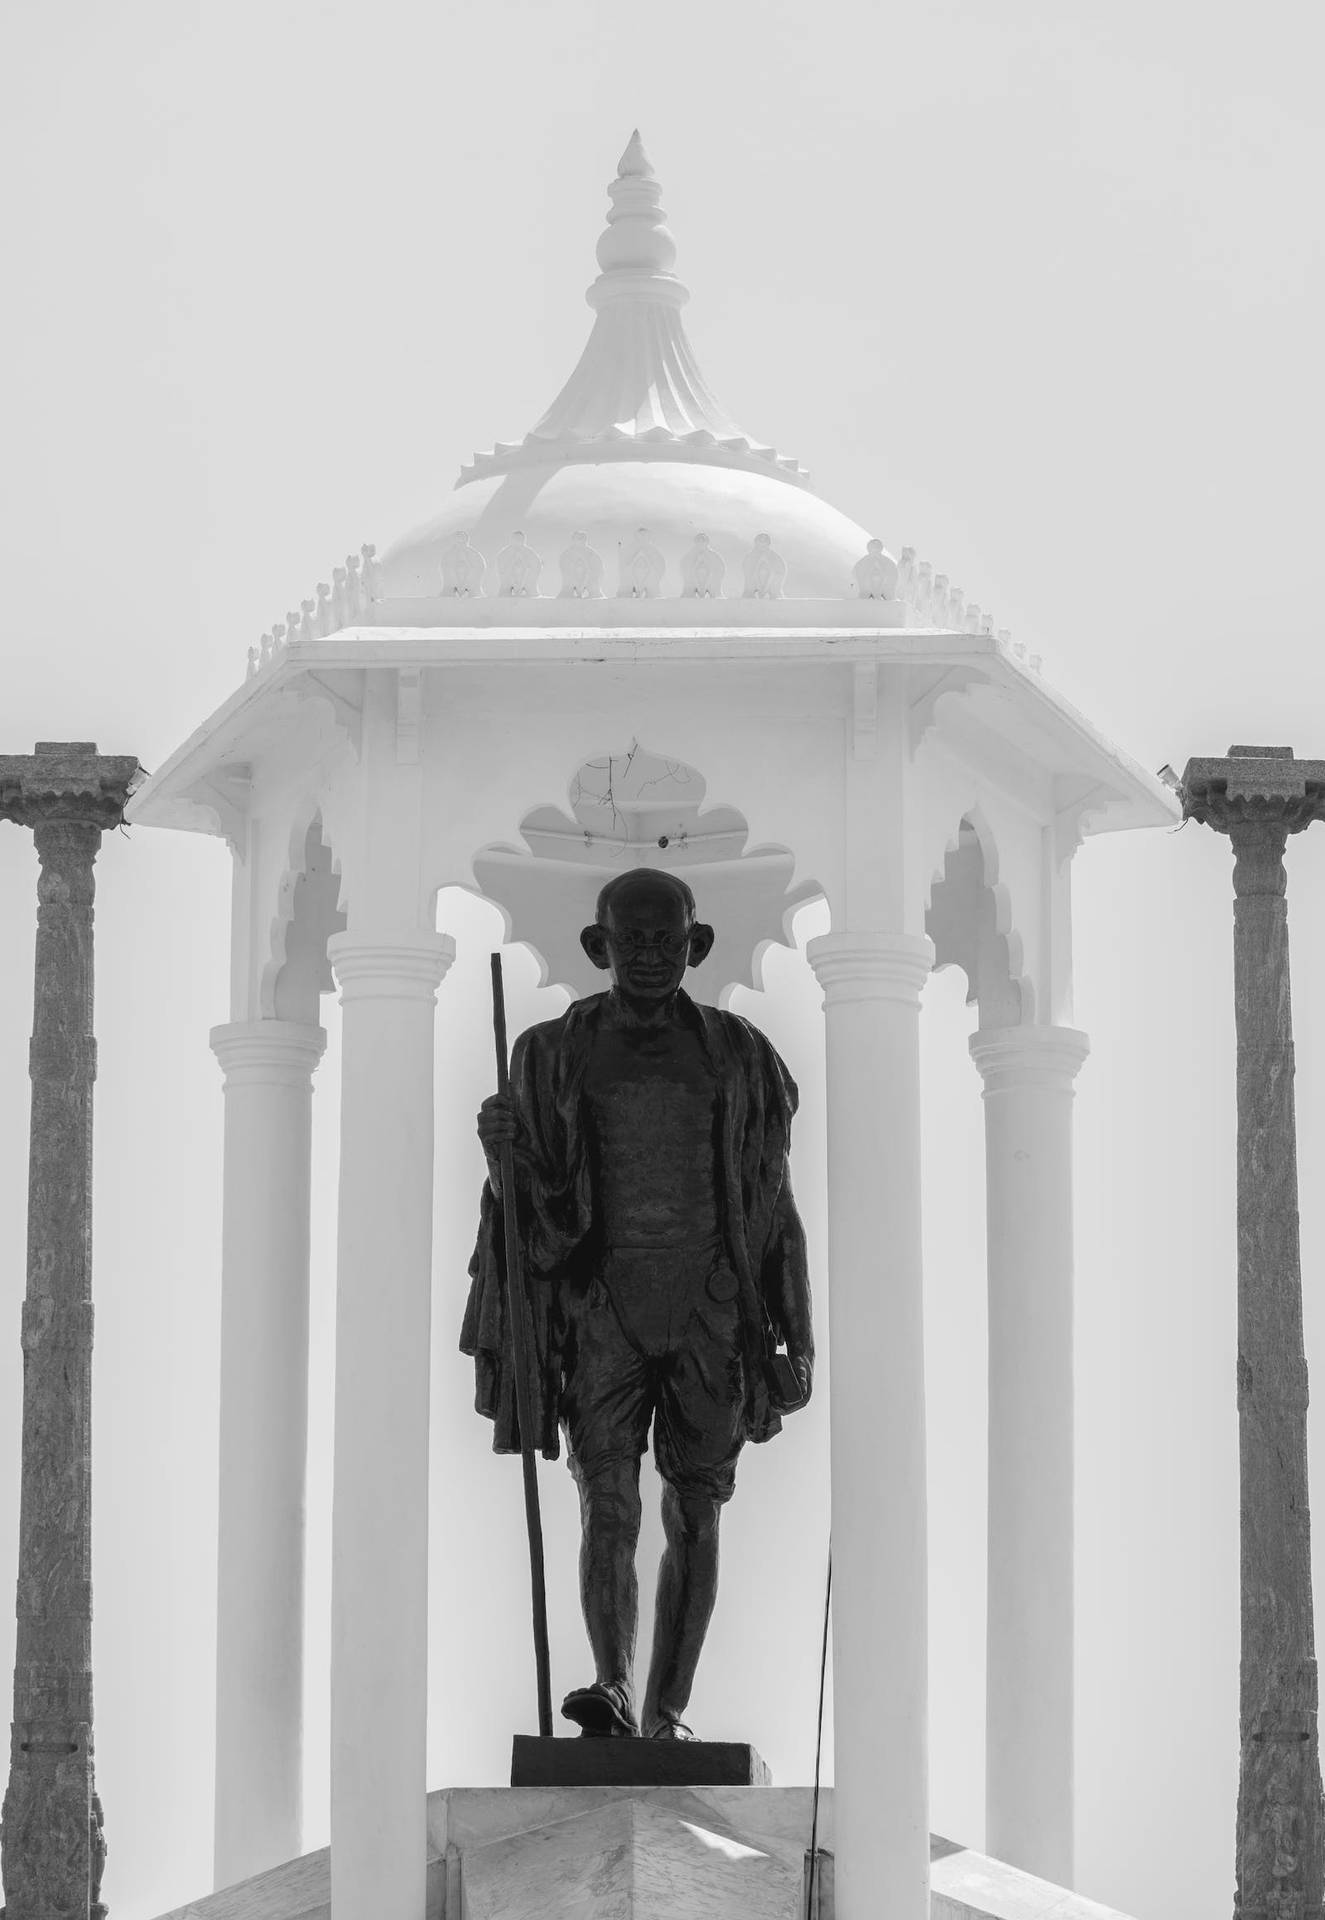 Caption: Majestic Statue Of Mahatma Gandhi